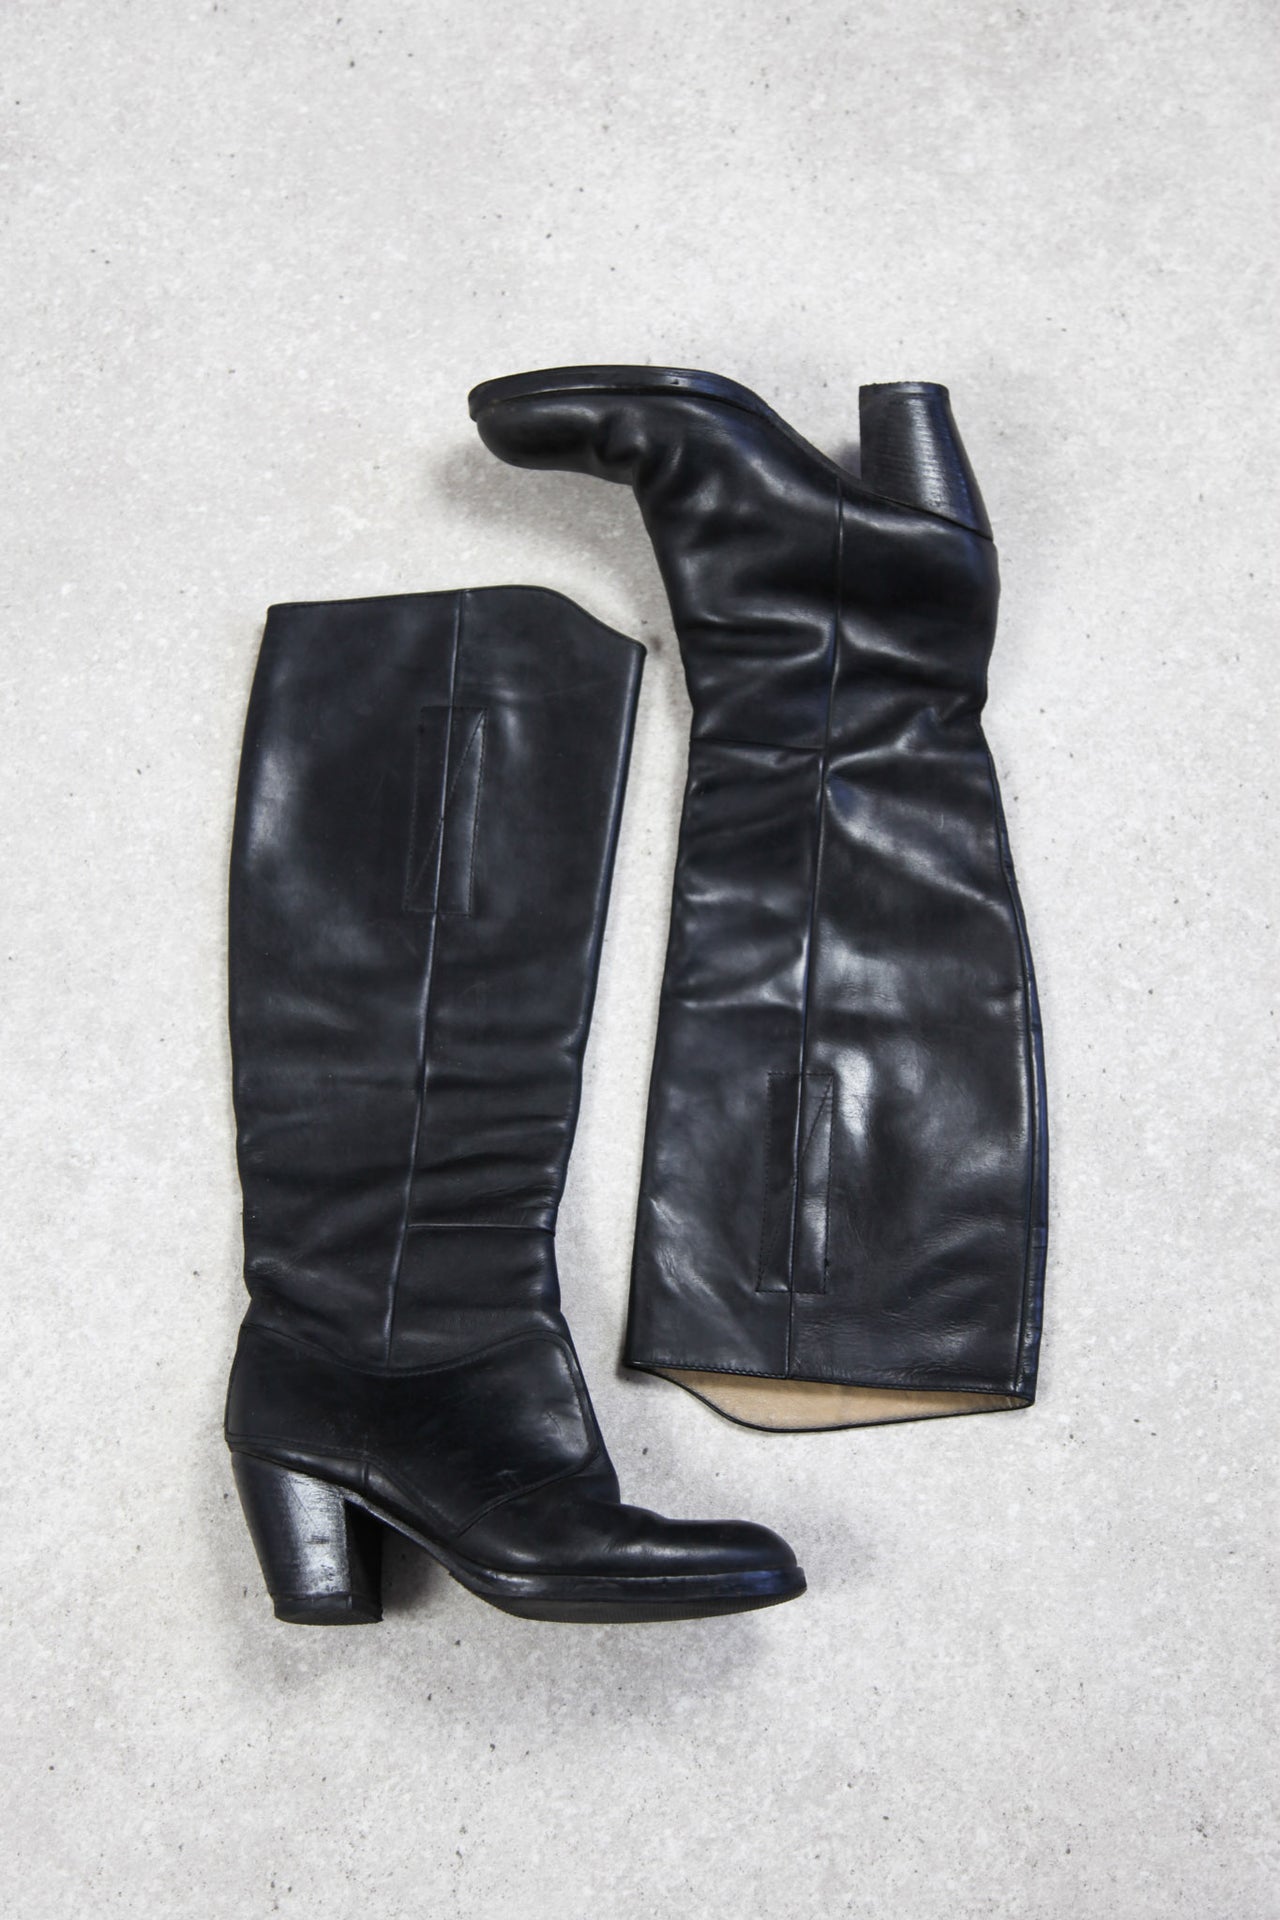 Acne Studios Pistol Knee High Black Leather Boots (EU37/ UK4)